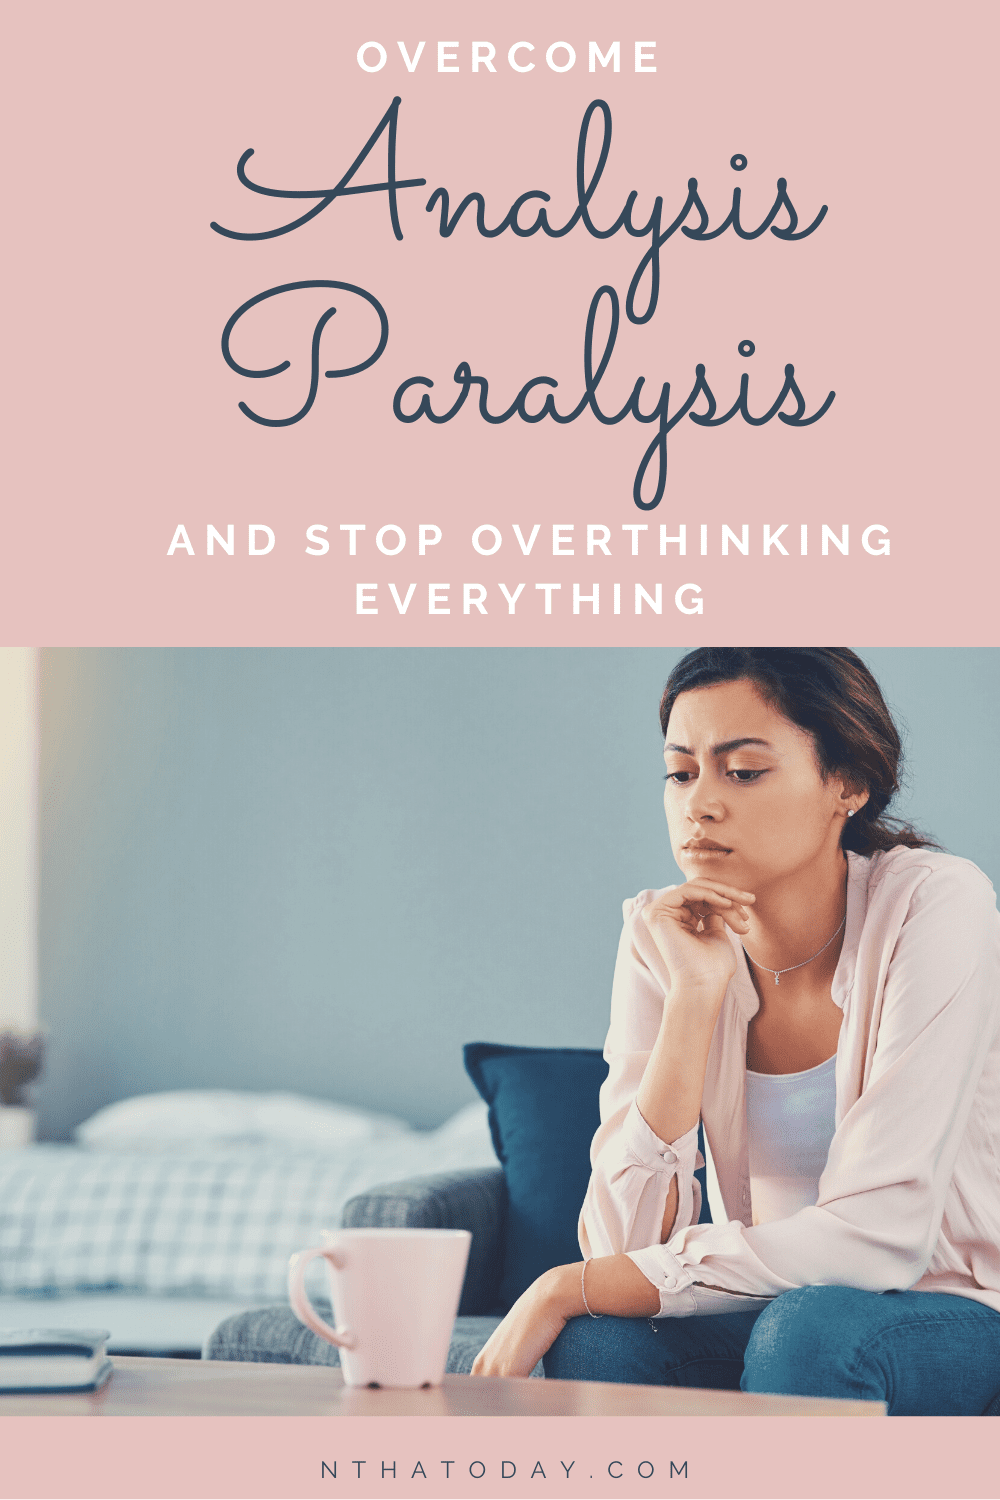 analysis paralysis, woman sitting overthinking